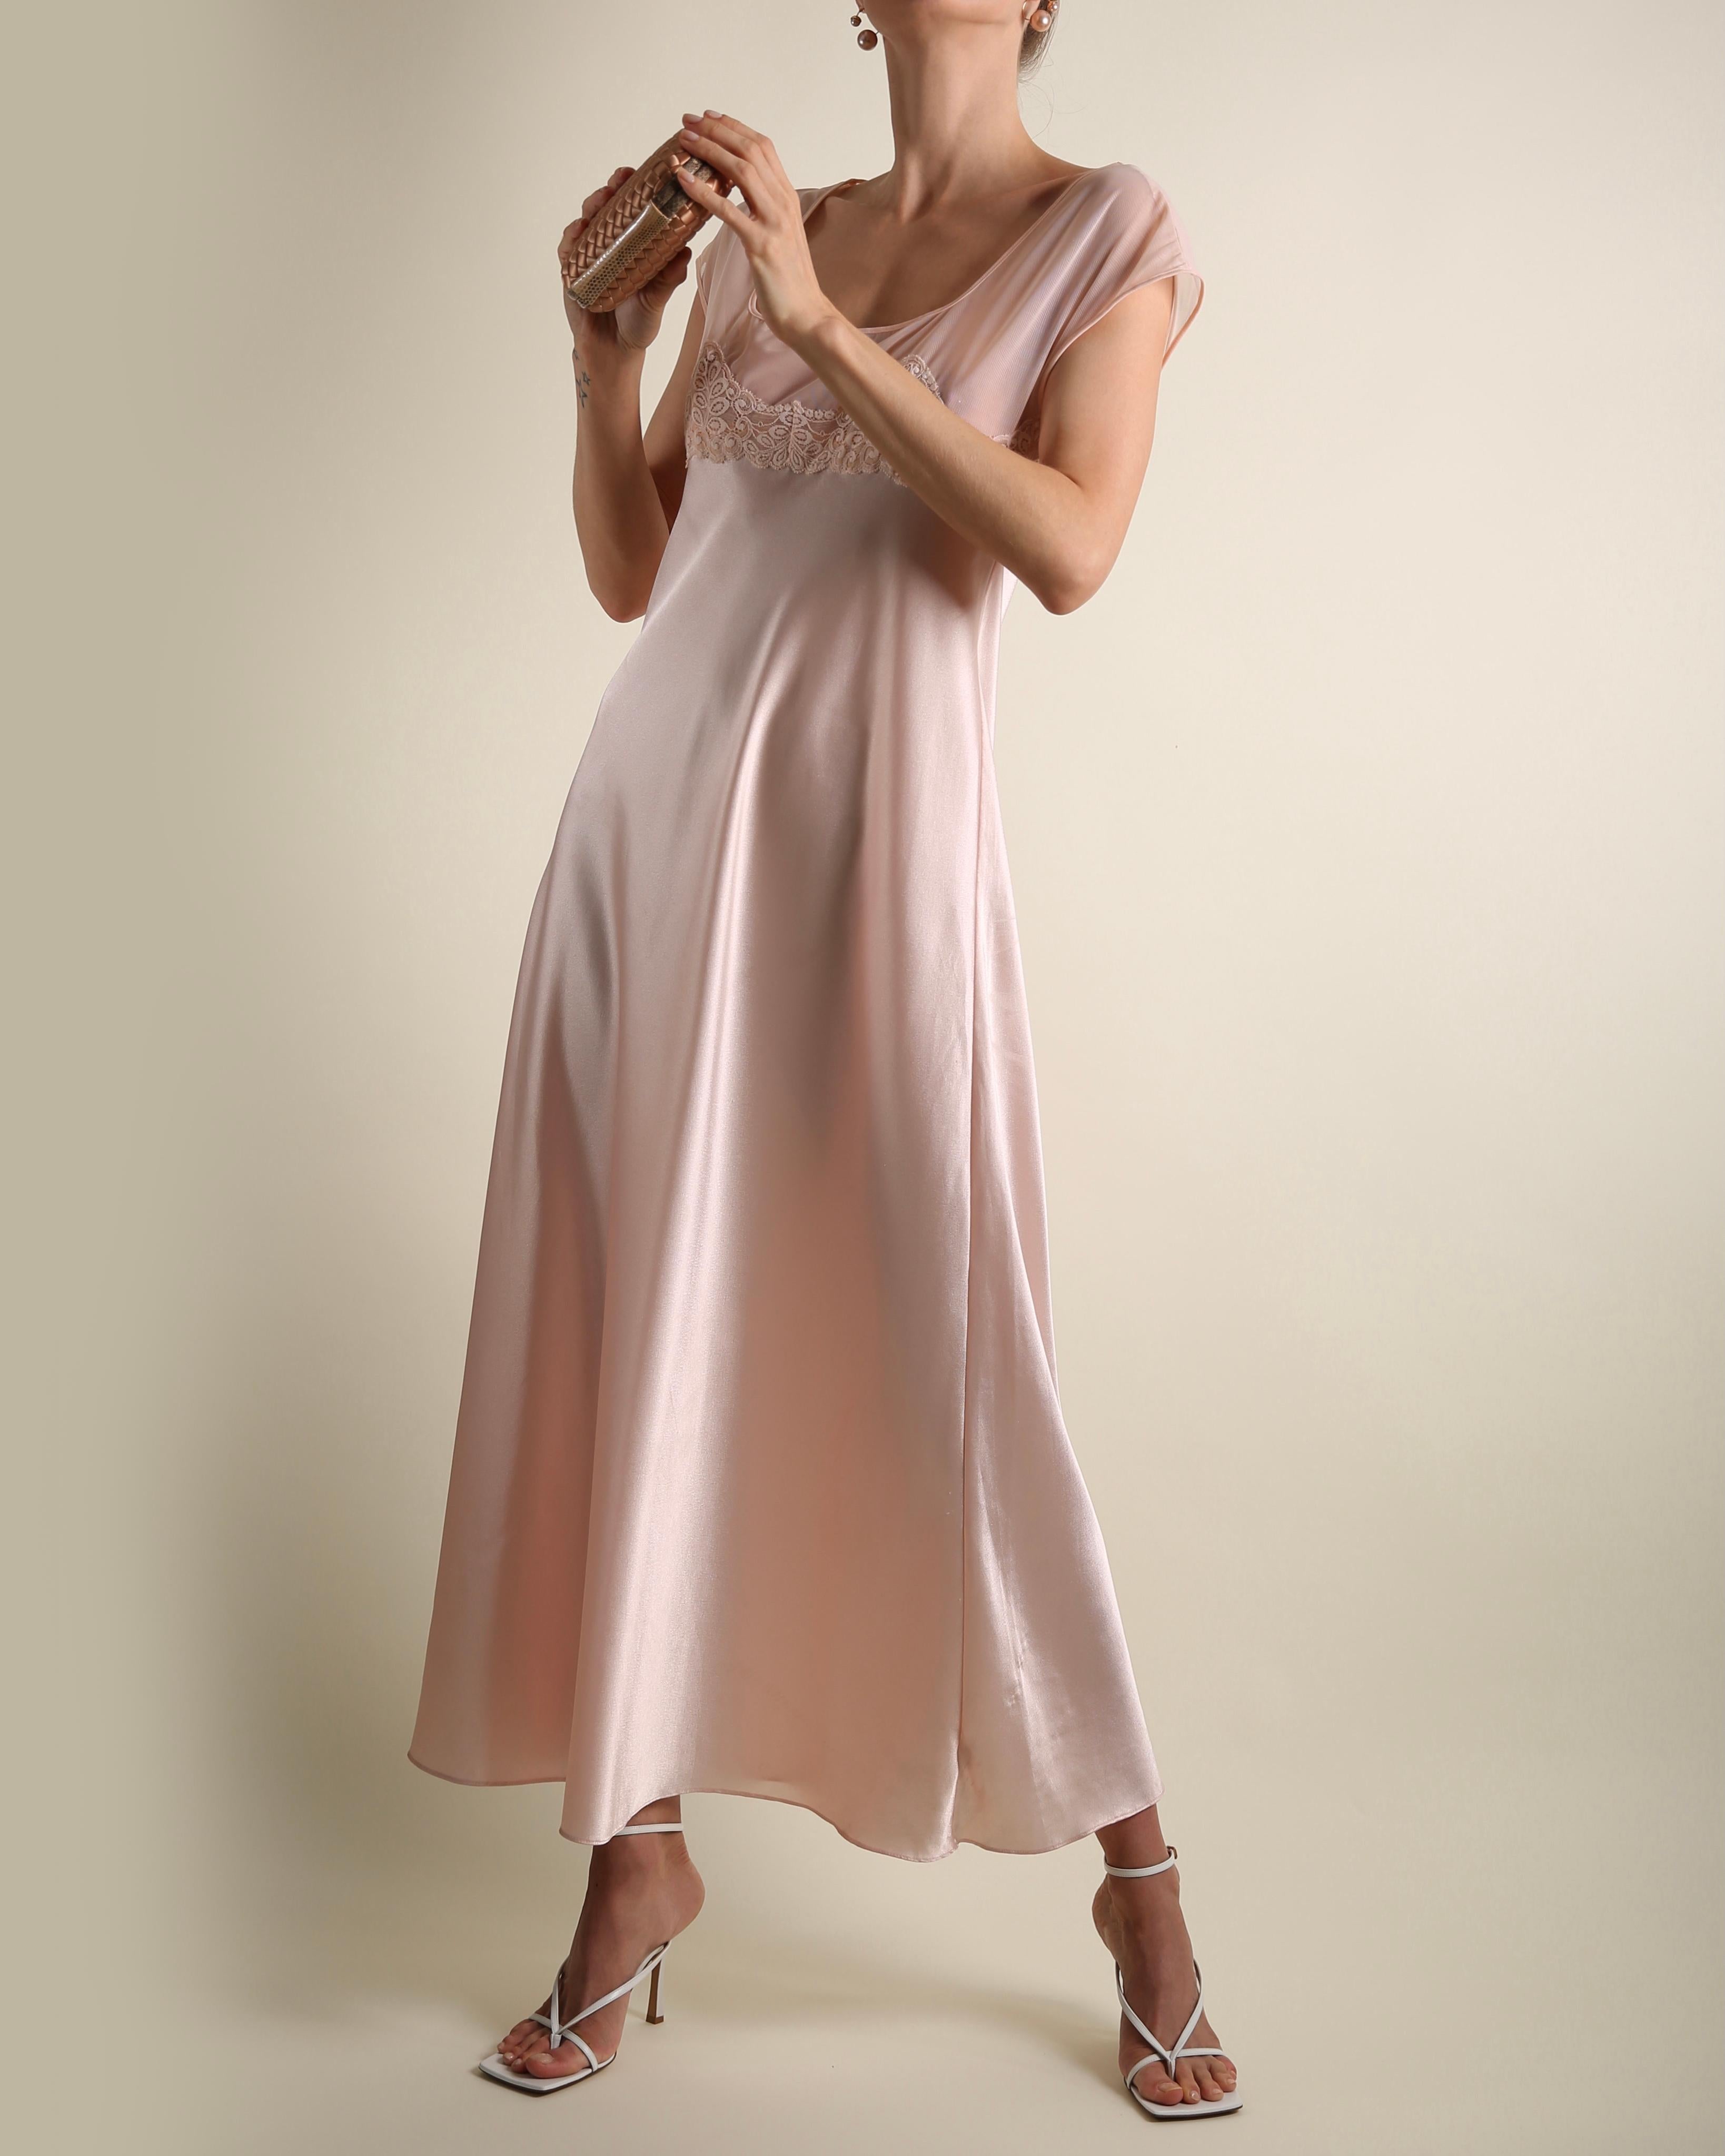 Valentino Intimo vintage pink satin sheer lace slip robe night gown midi dress  1